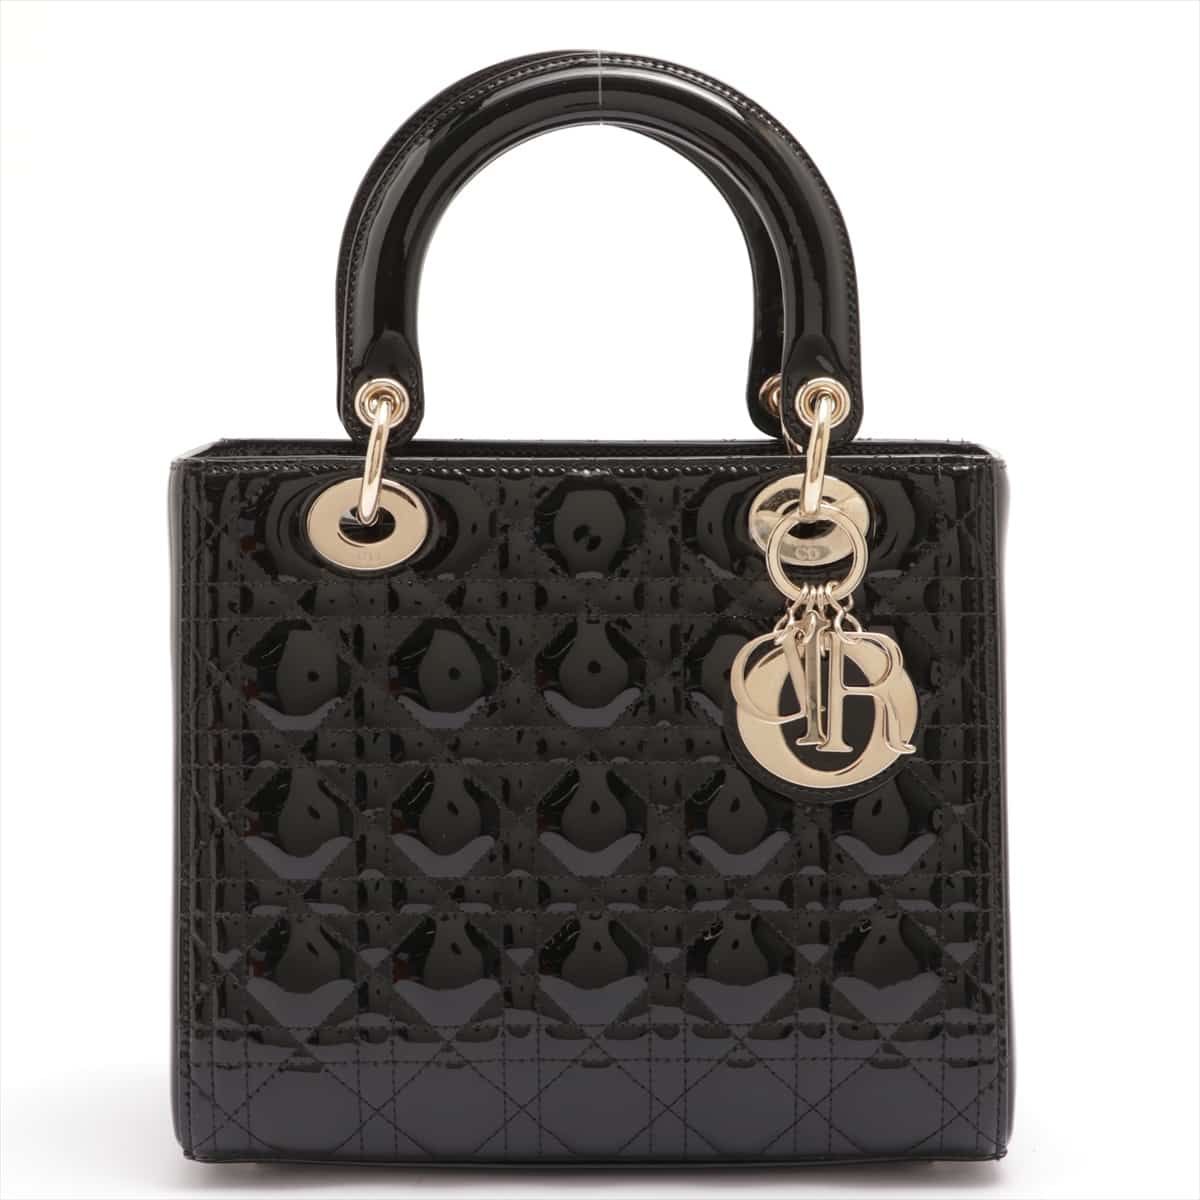 Christian Dior Lady Dior Cannage Patent leather 2way handbag Black